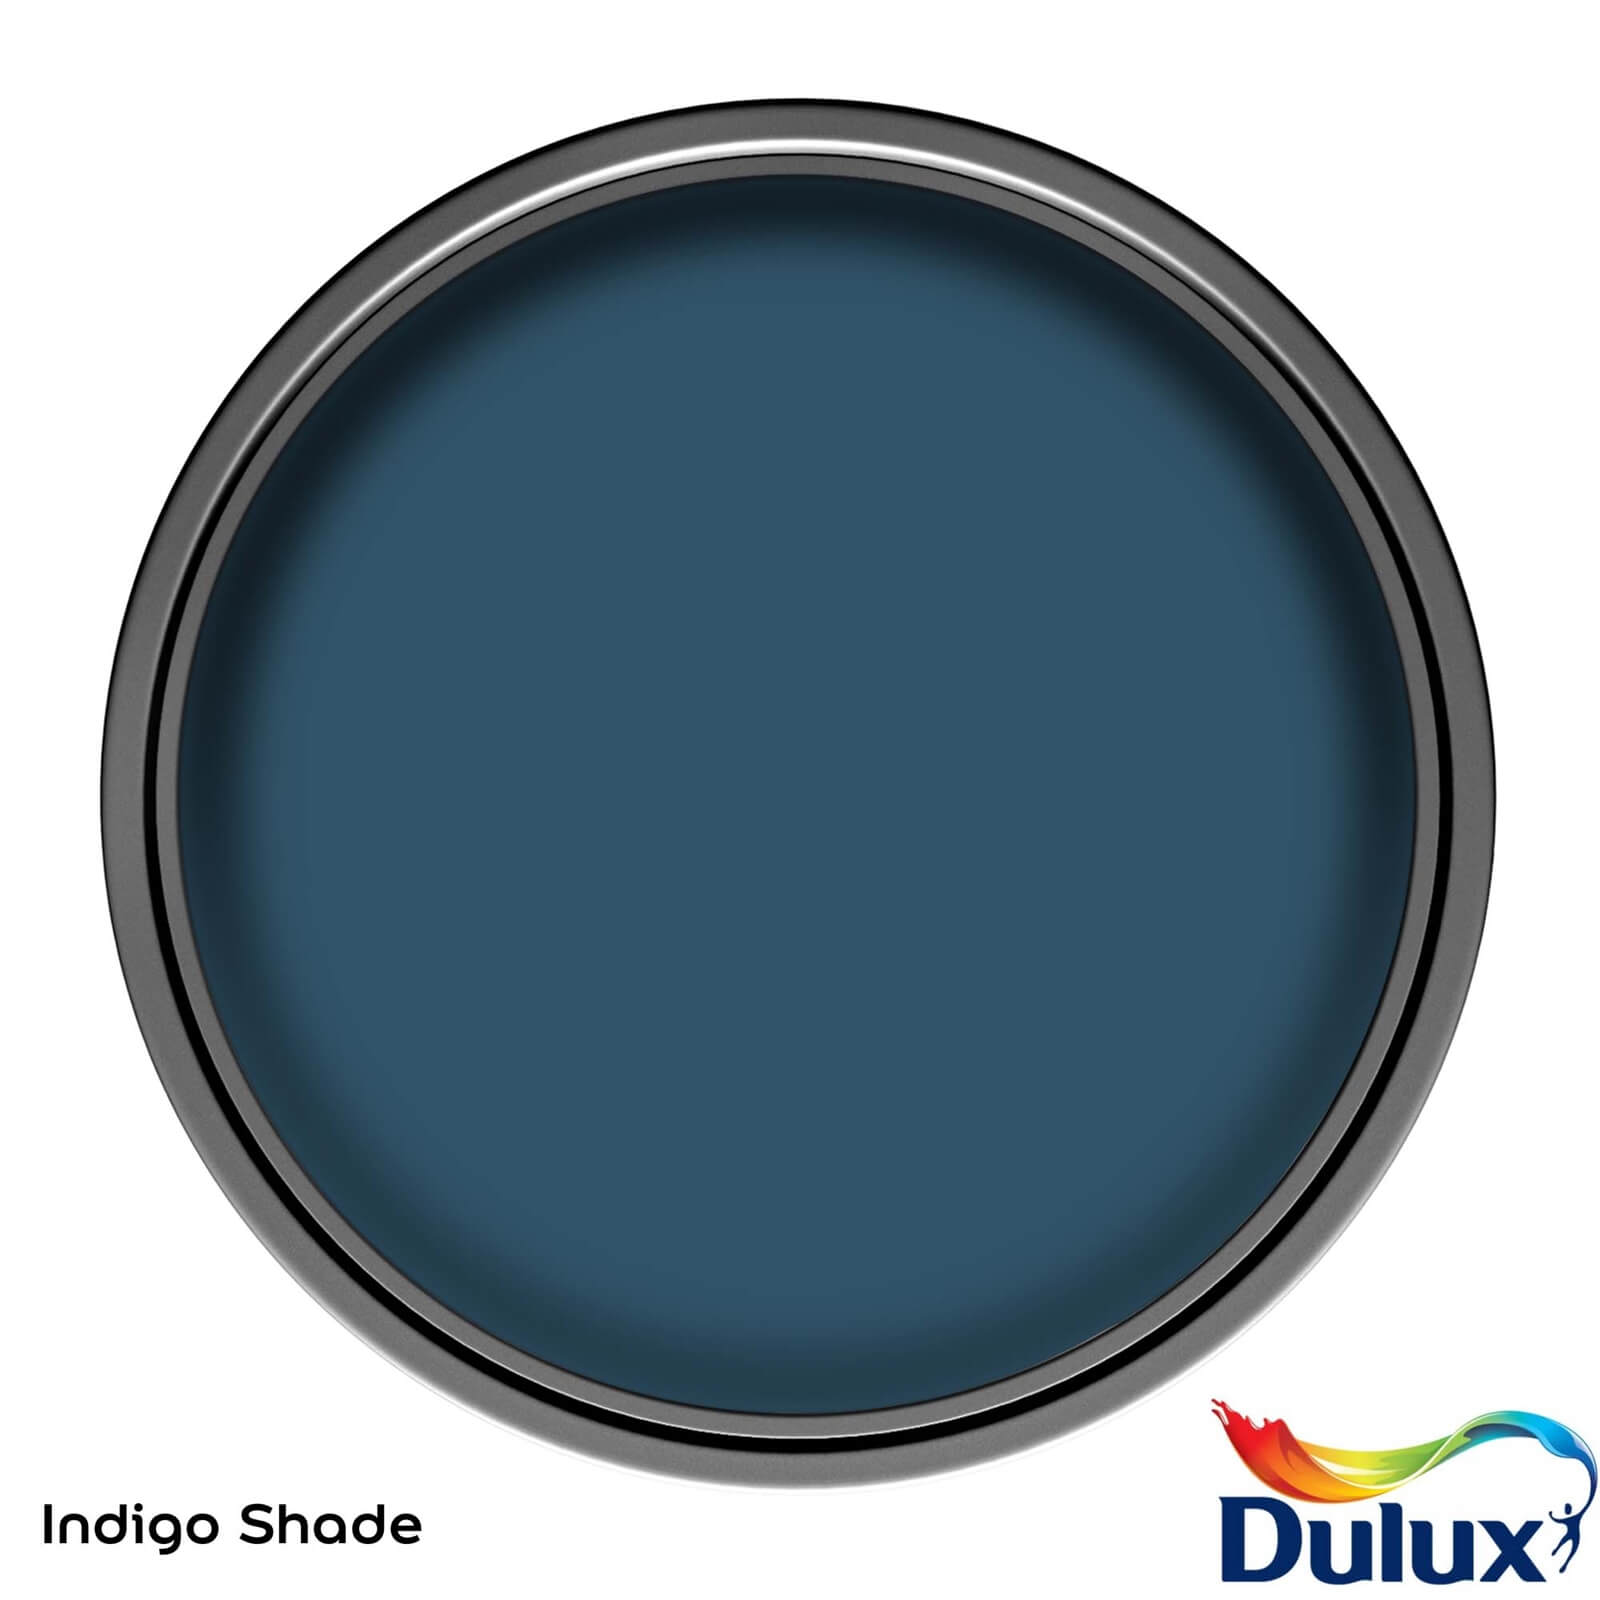 Dulux Weathershield Quick Dry Satin Paint Indigo Shade - 750ml